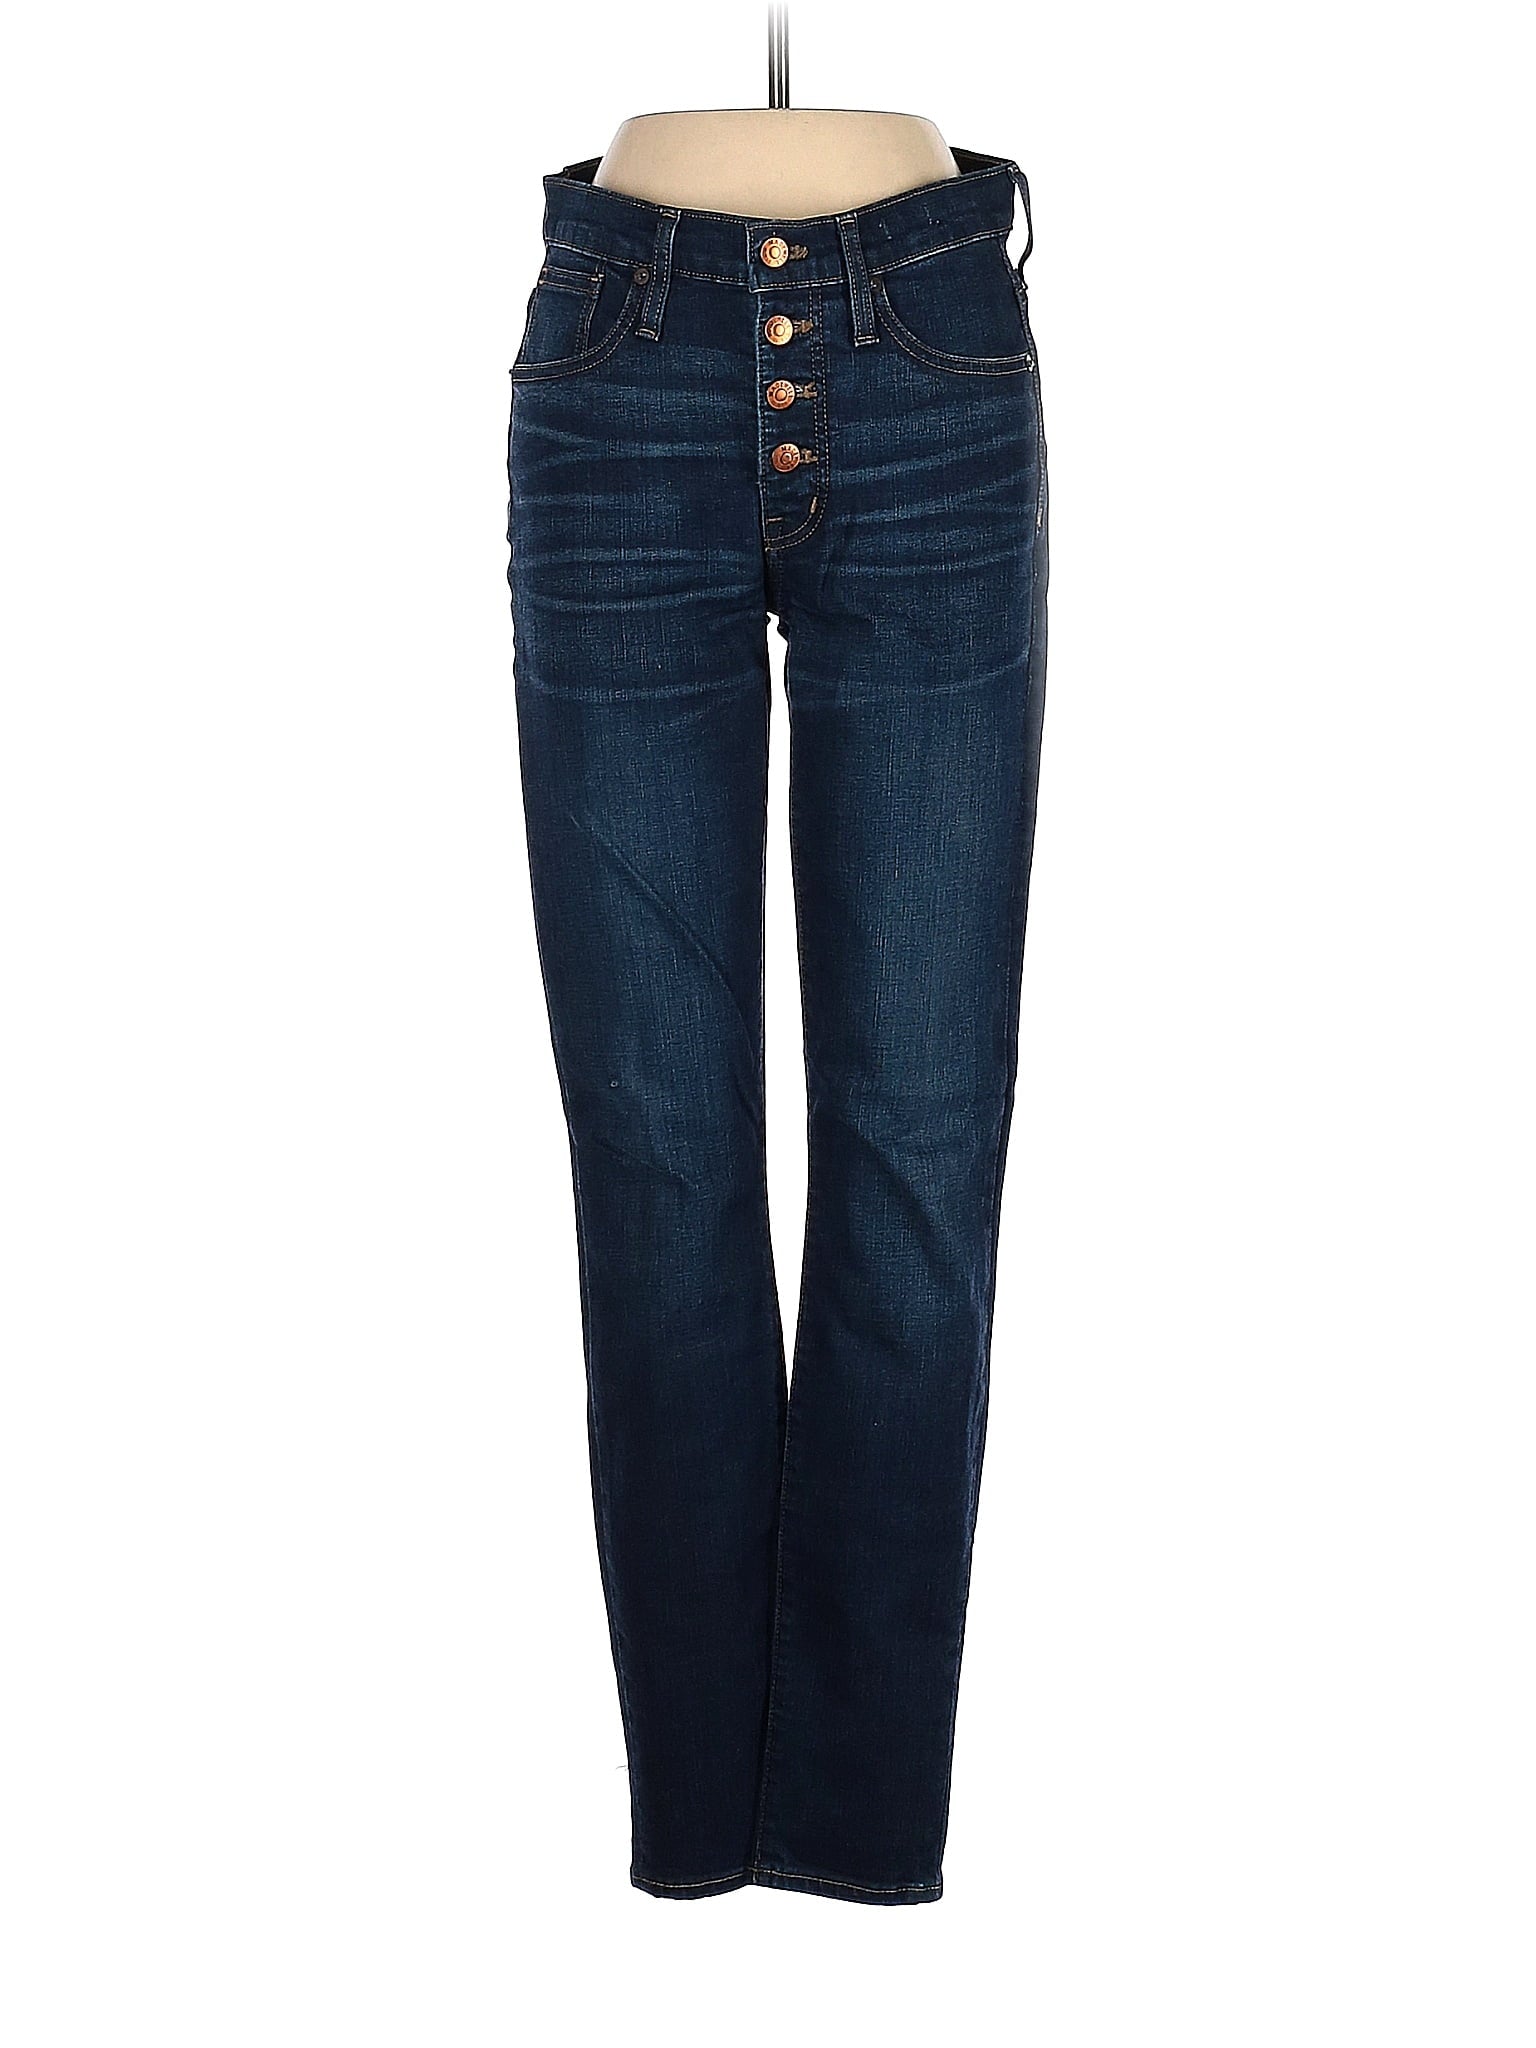 Low-Rise Jeans waist size - 26